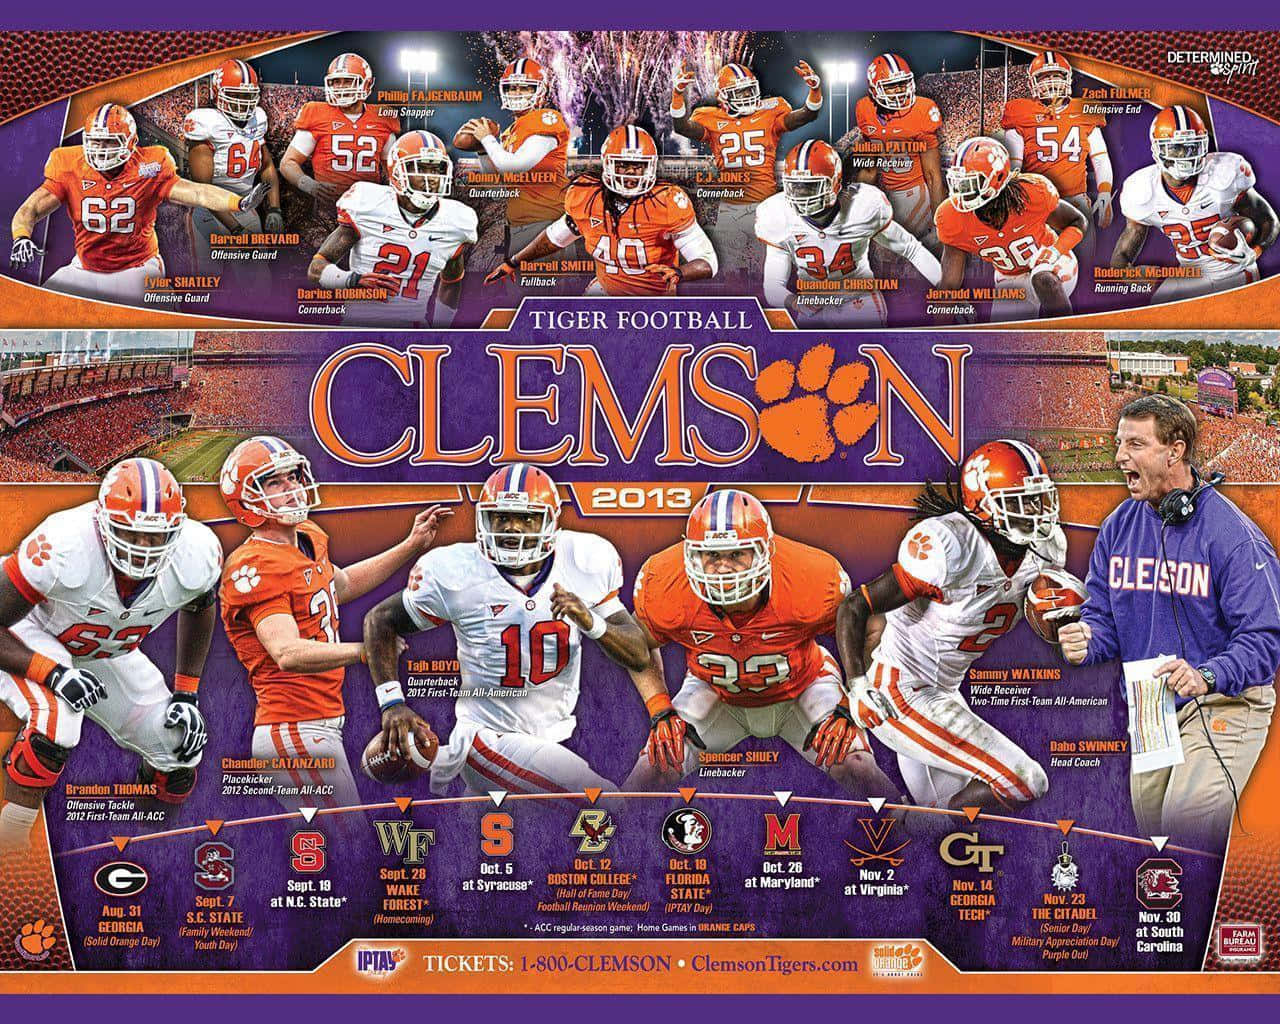 Clemson Tigers Fodbold 1280 X 1024 Wallpaper